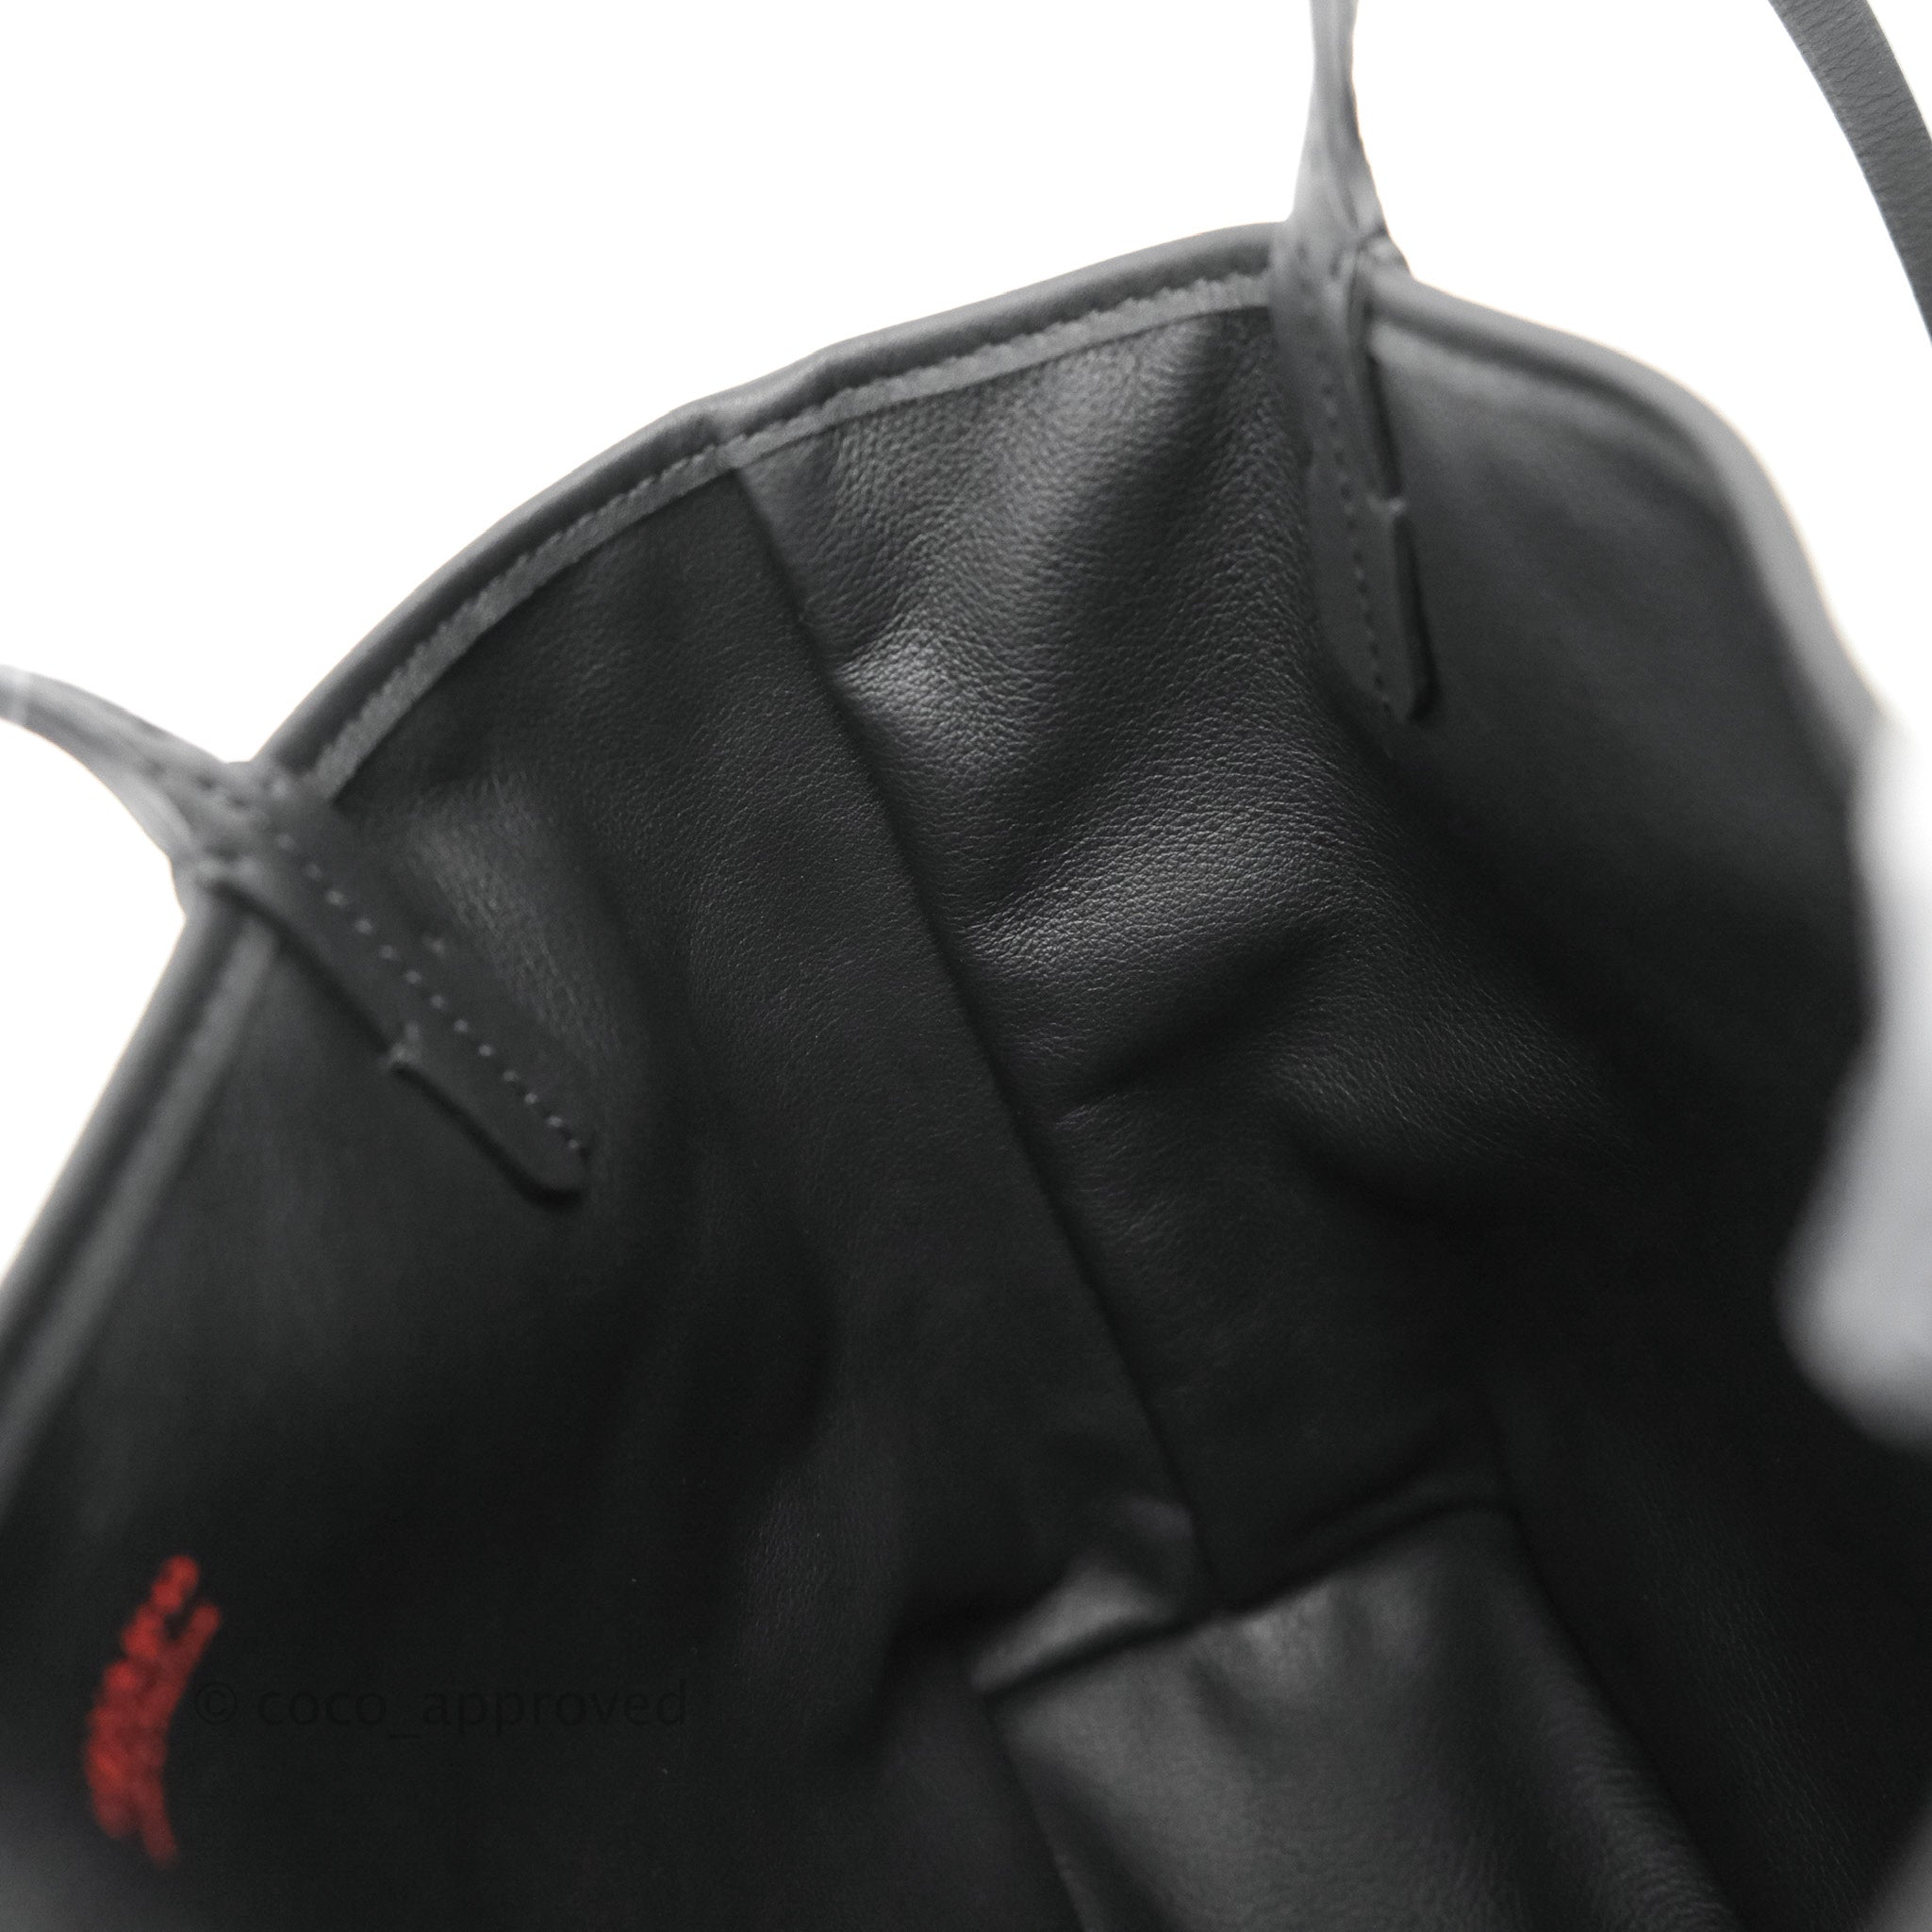 Goyard Anjou Mini Bag Goyardine Canvas Black – Coco Approved Studio